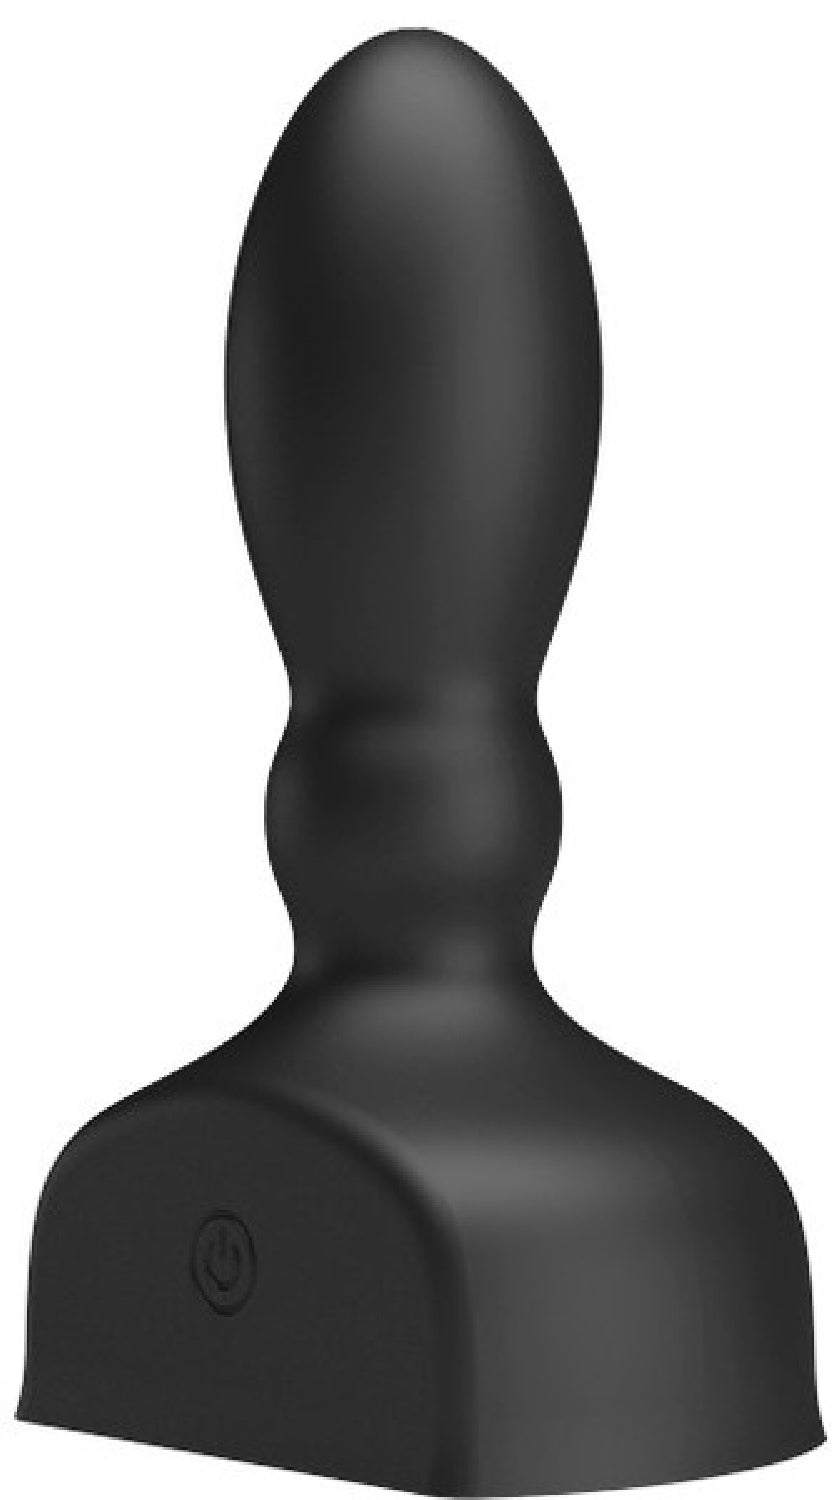 Mr. Play - Inflatable Anal Plug - Black